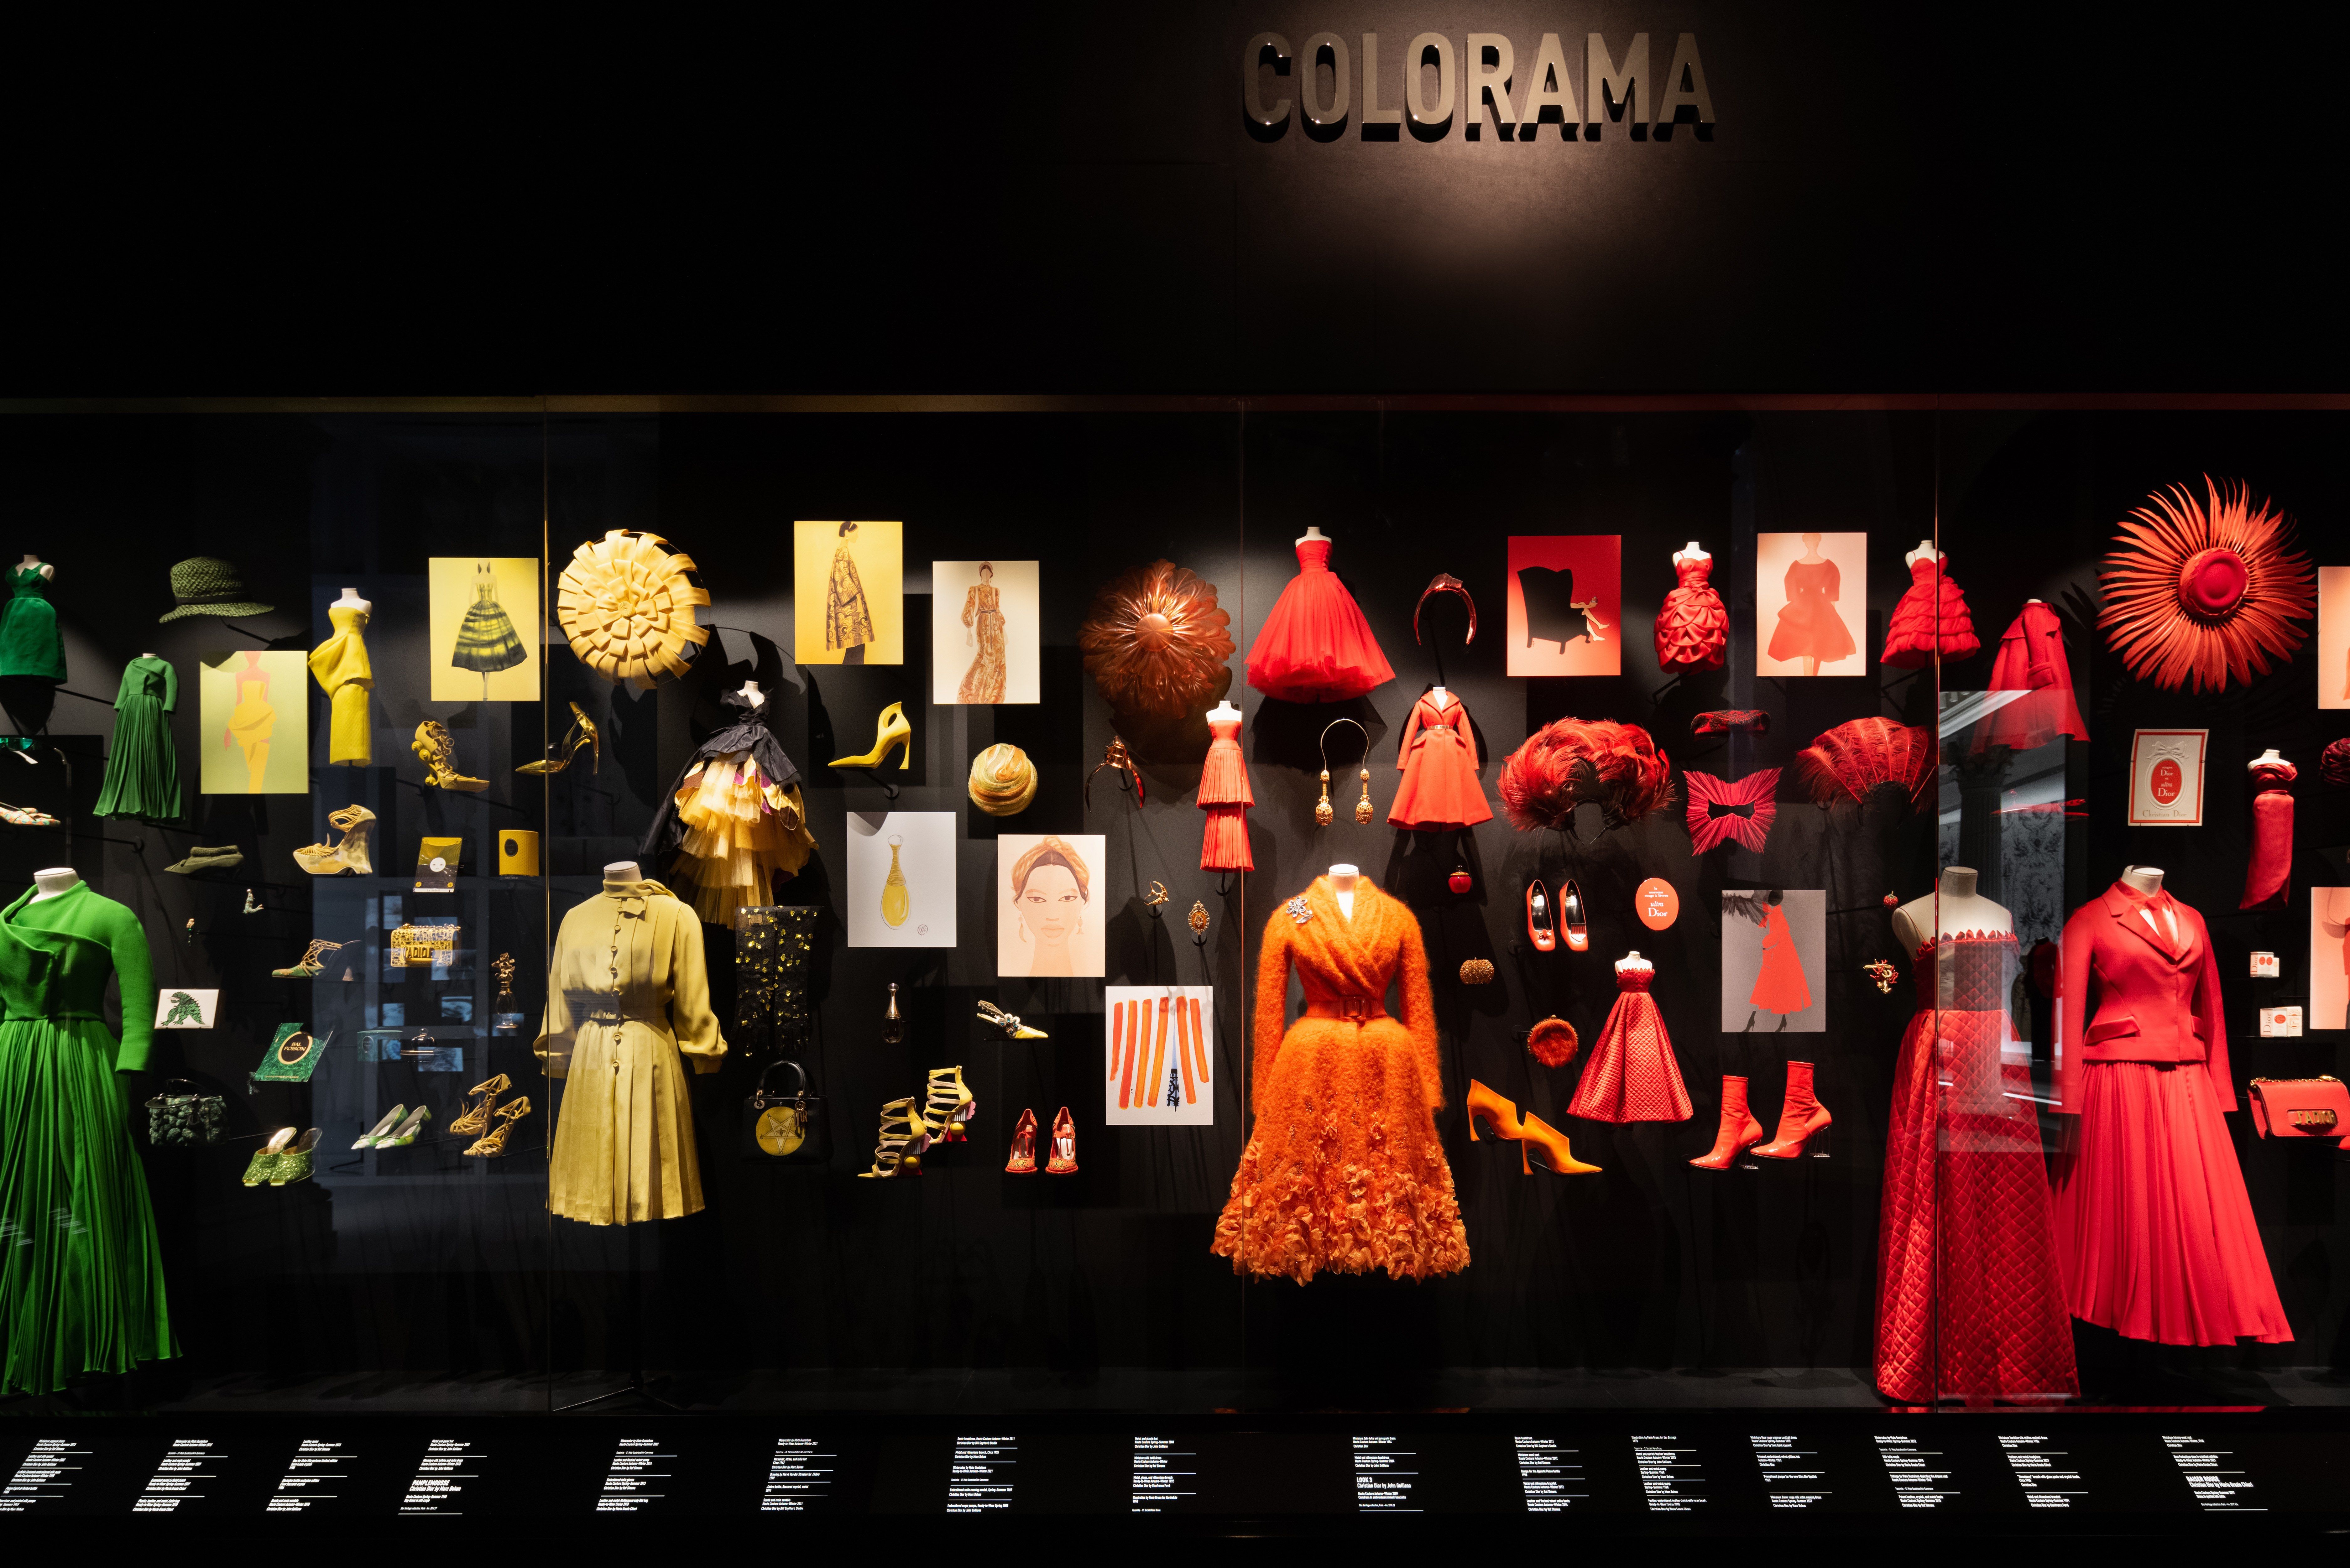 dior releases famous 'designer of dreams' exhibition online